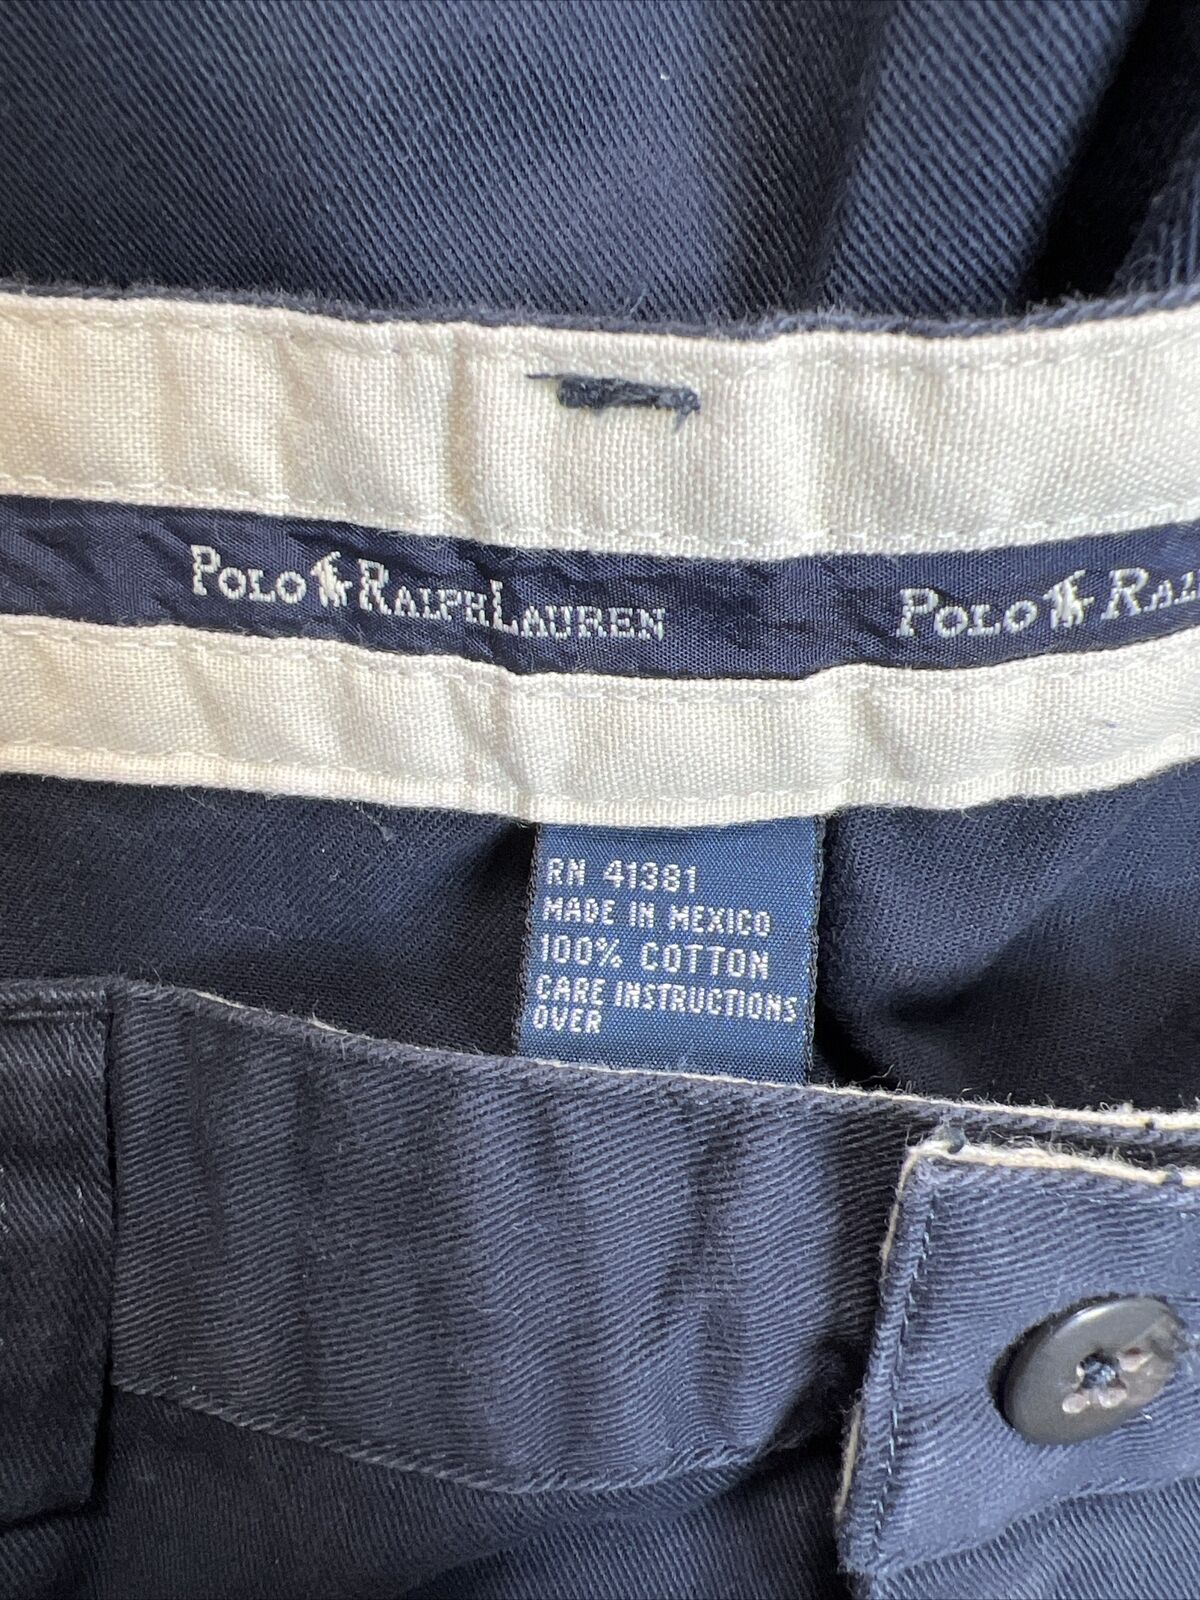 NEW Polo Ralph Lauren Men's Navy Blue Cotton Chino Shorts - 38